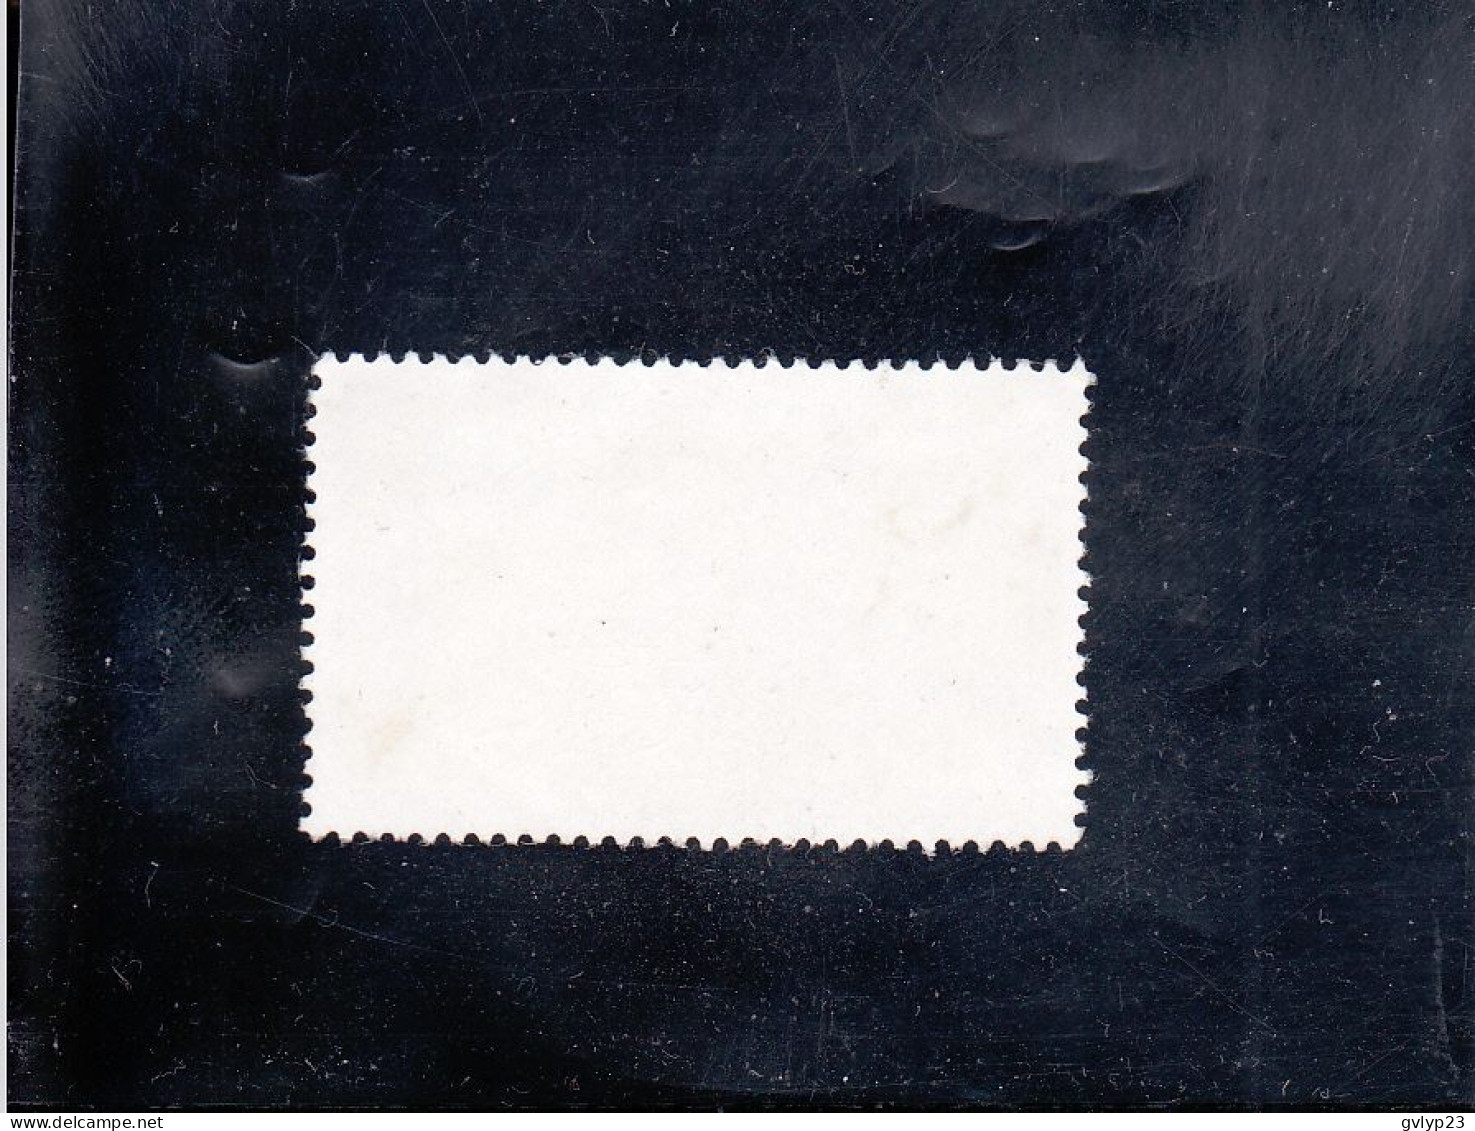 PONT MACAO-TAIPA 2P SUR 2P20 POLYCHROME  OBLITéRé N° 445 YVERT ET TELLIER 1979-81 - Used Stamps